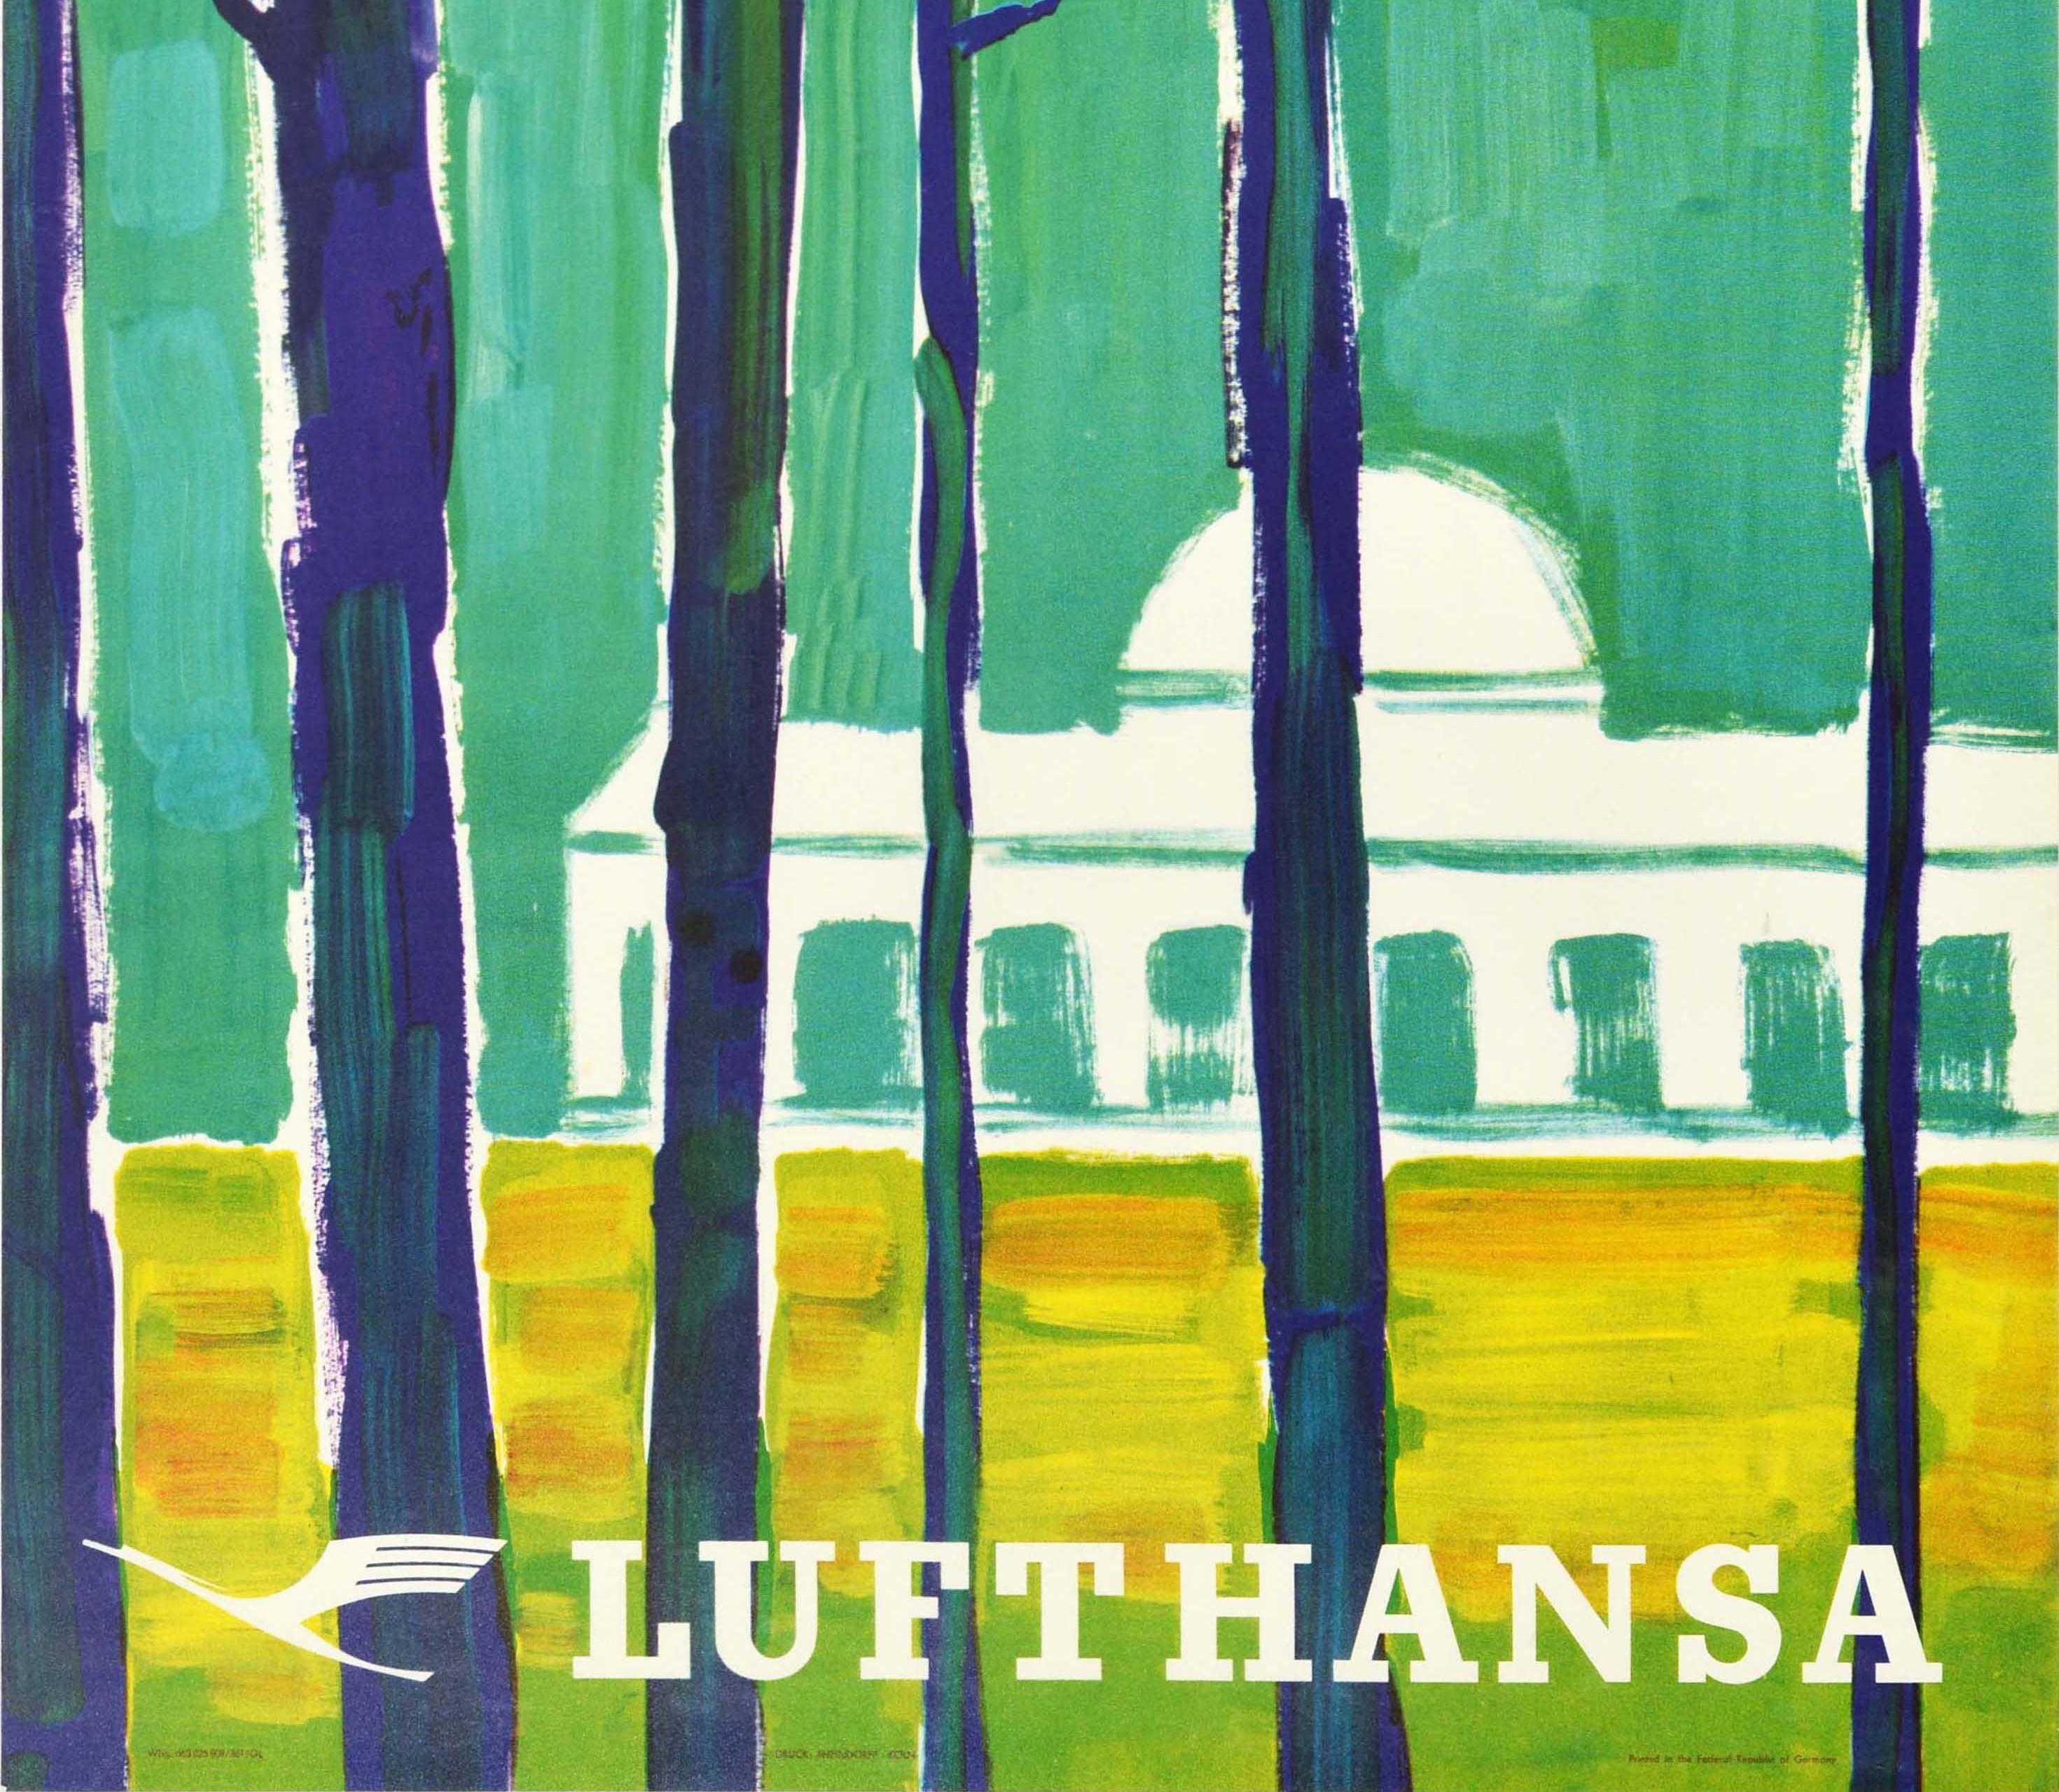 German Original Vintage Travel Poster For Lufthansa Airlines Midcentury Modern Artwork